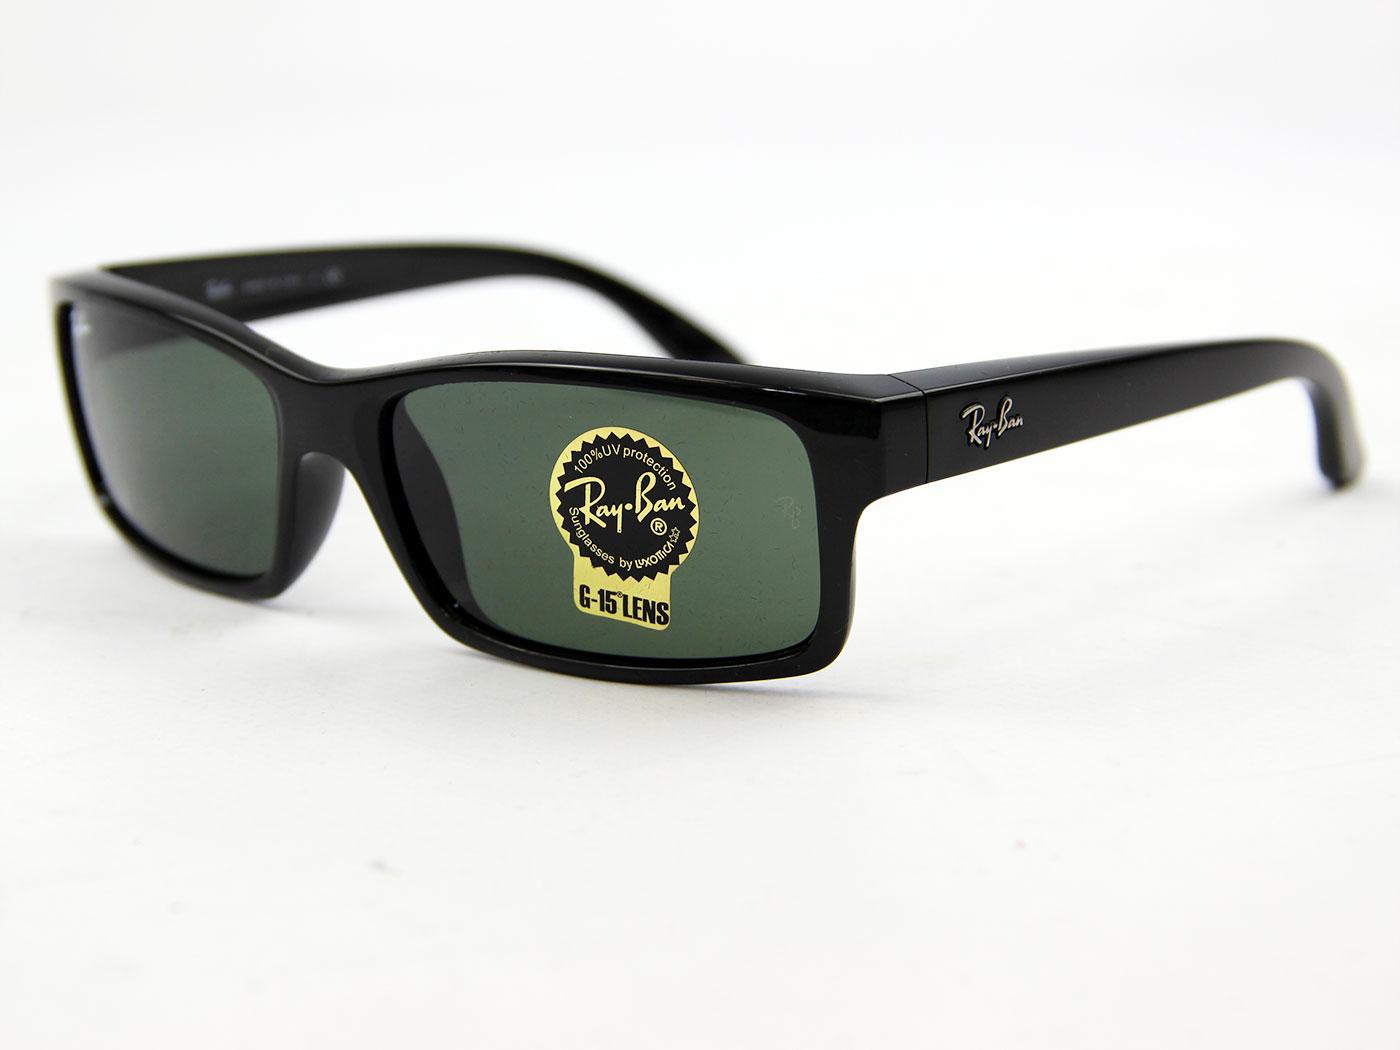 Ray-Ban Retro Mod Widescreen Wayfarer Sunglasses in Black